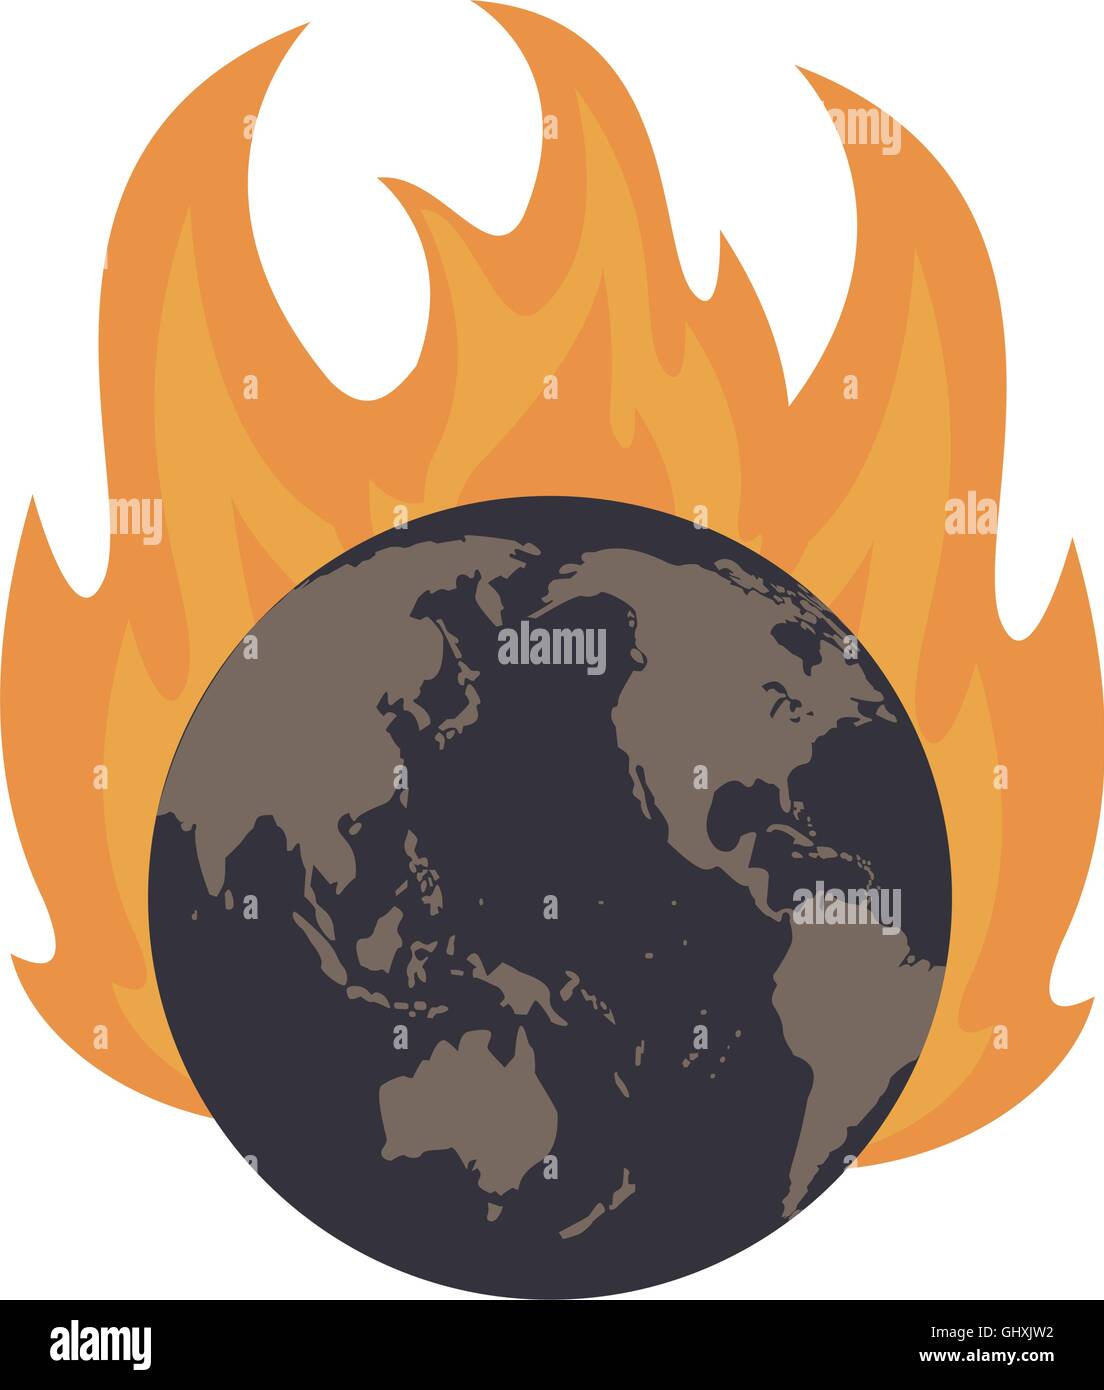 earth globe on fire icon Stock Vector